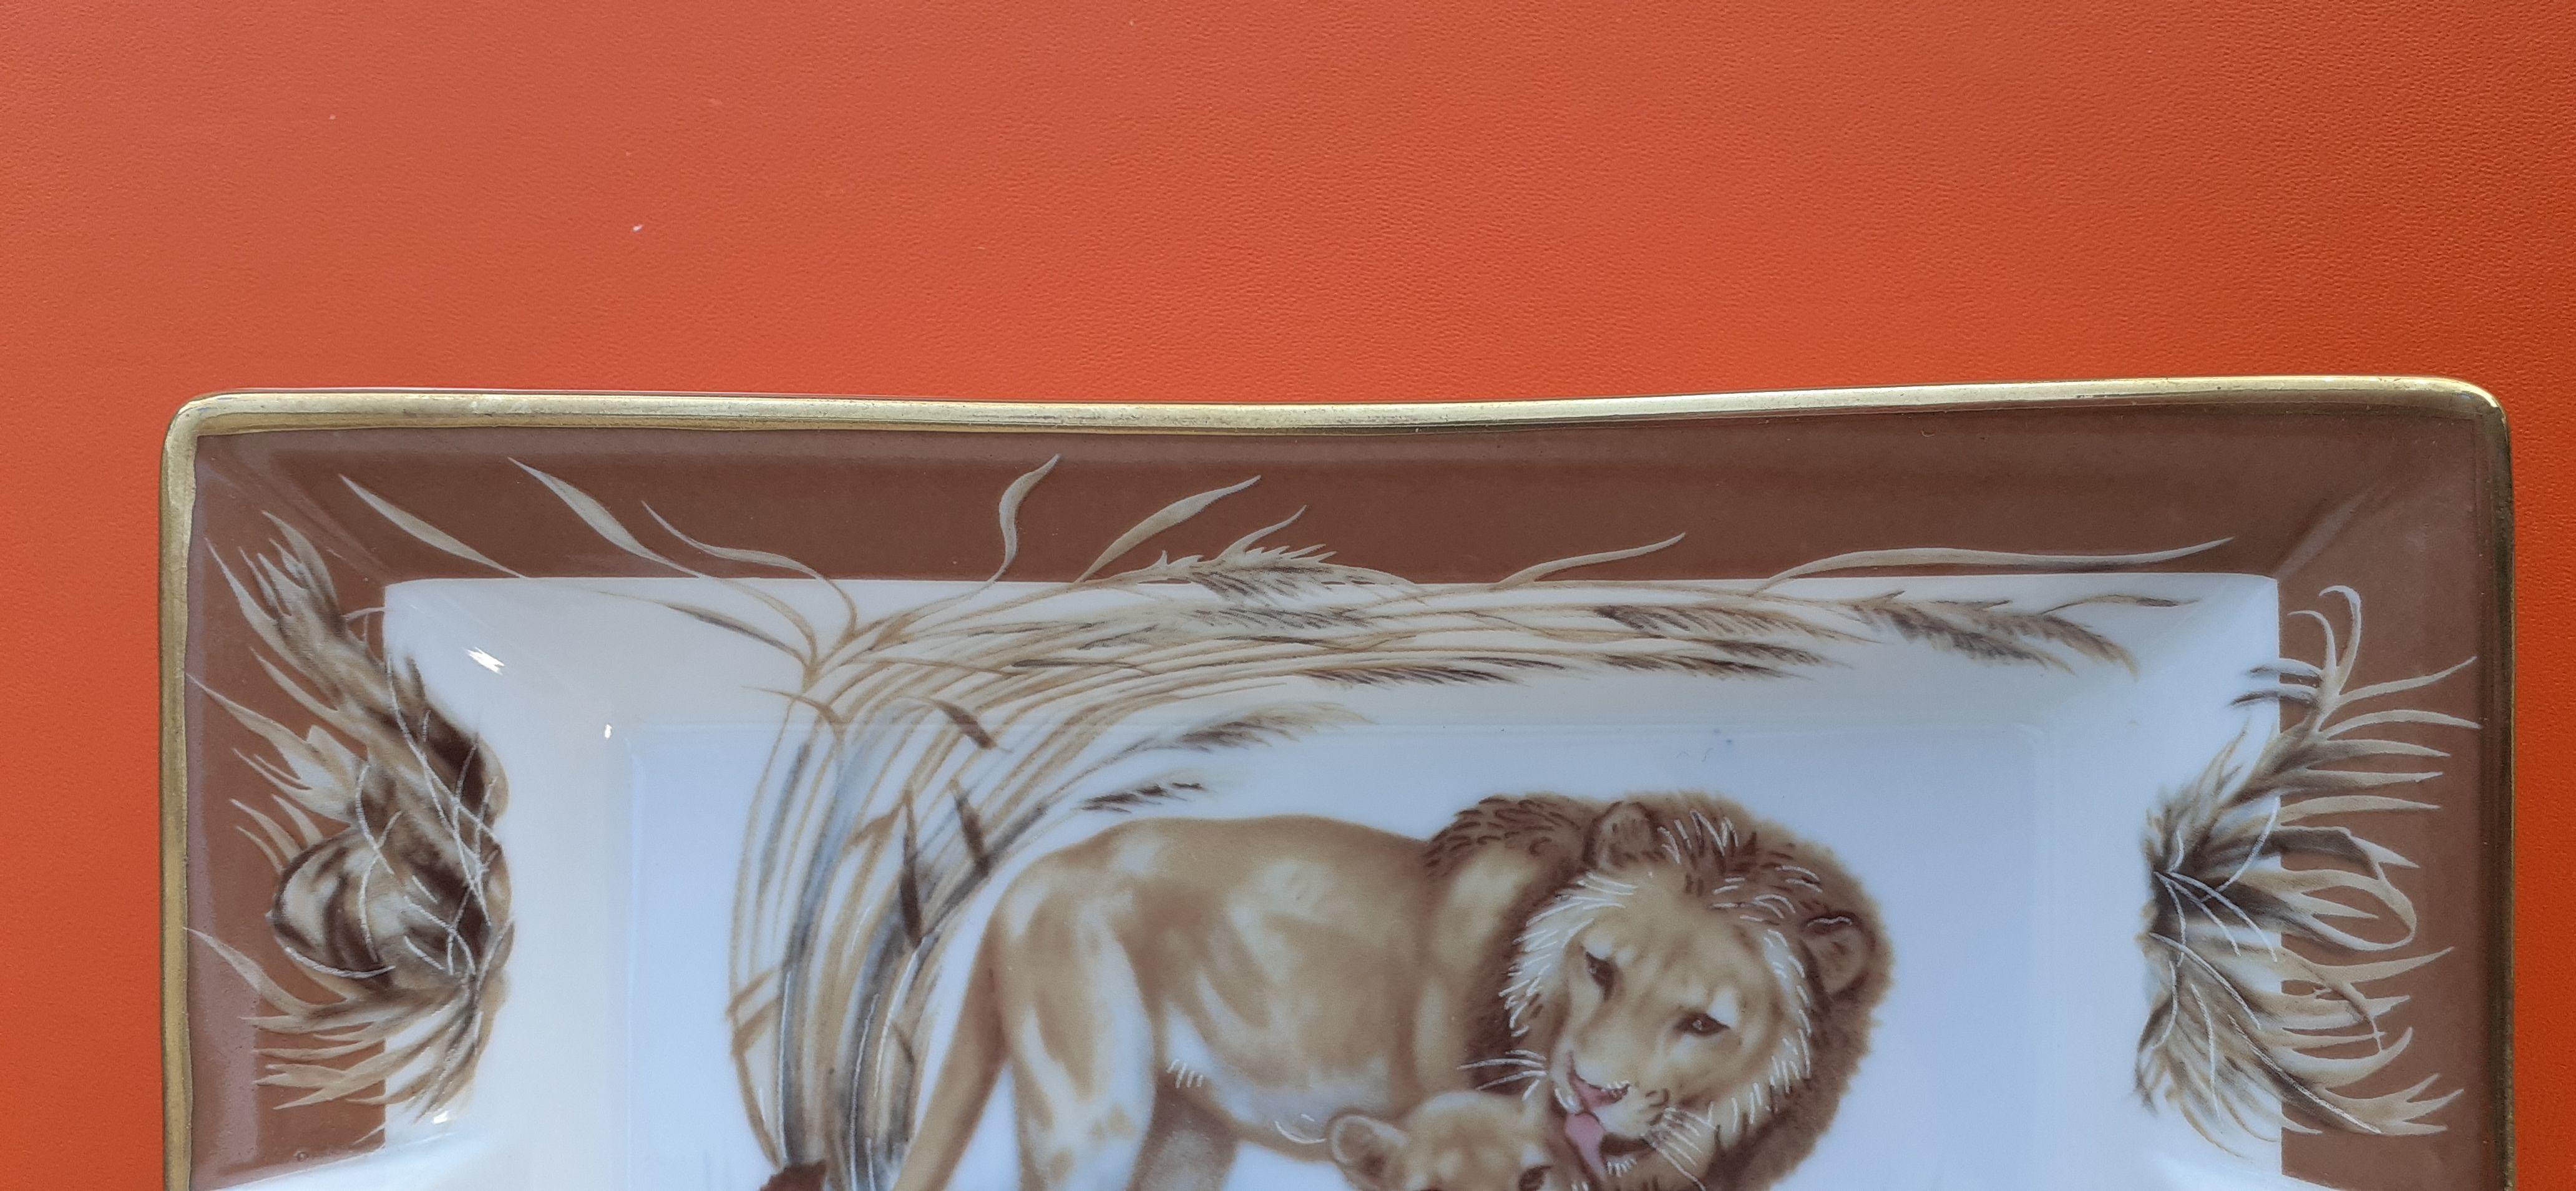 Hermès Cigar Ashtray Change Tray Lion and Lioness Kenya Africa R Dallet For Sale 5